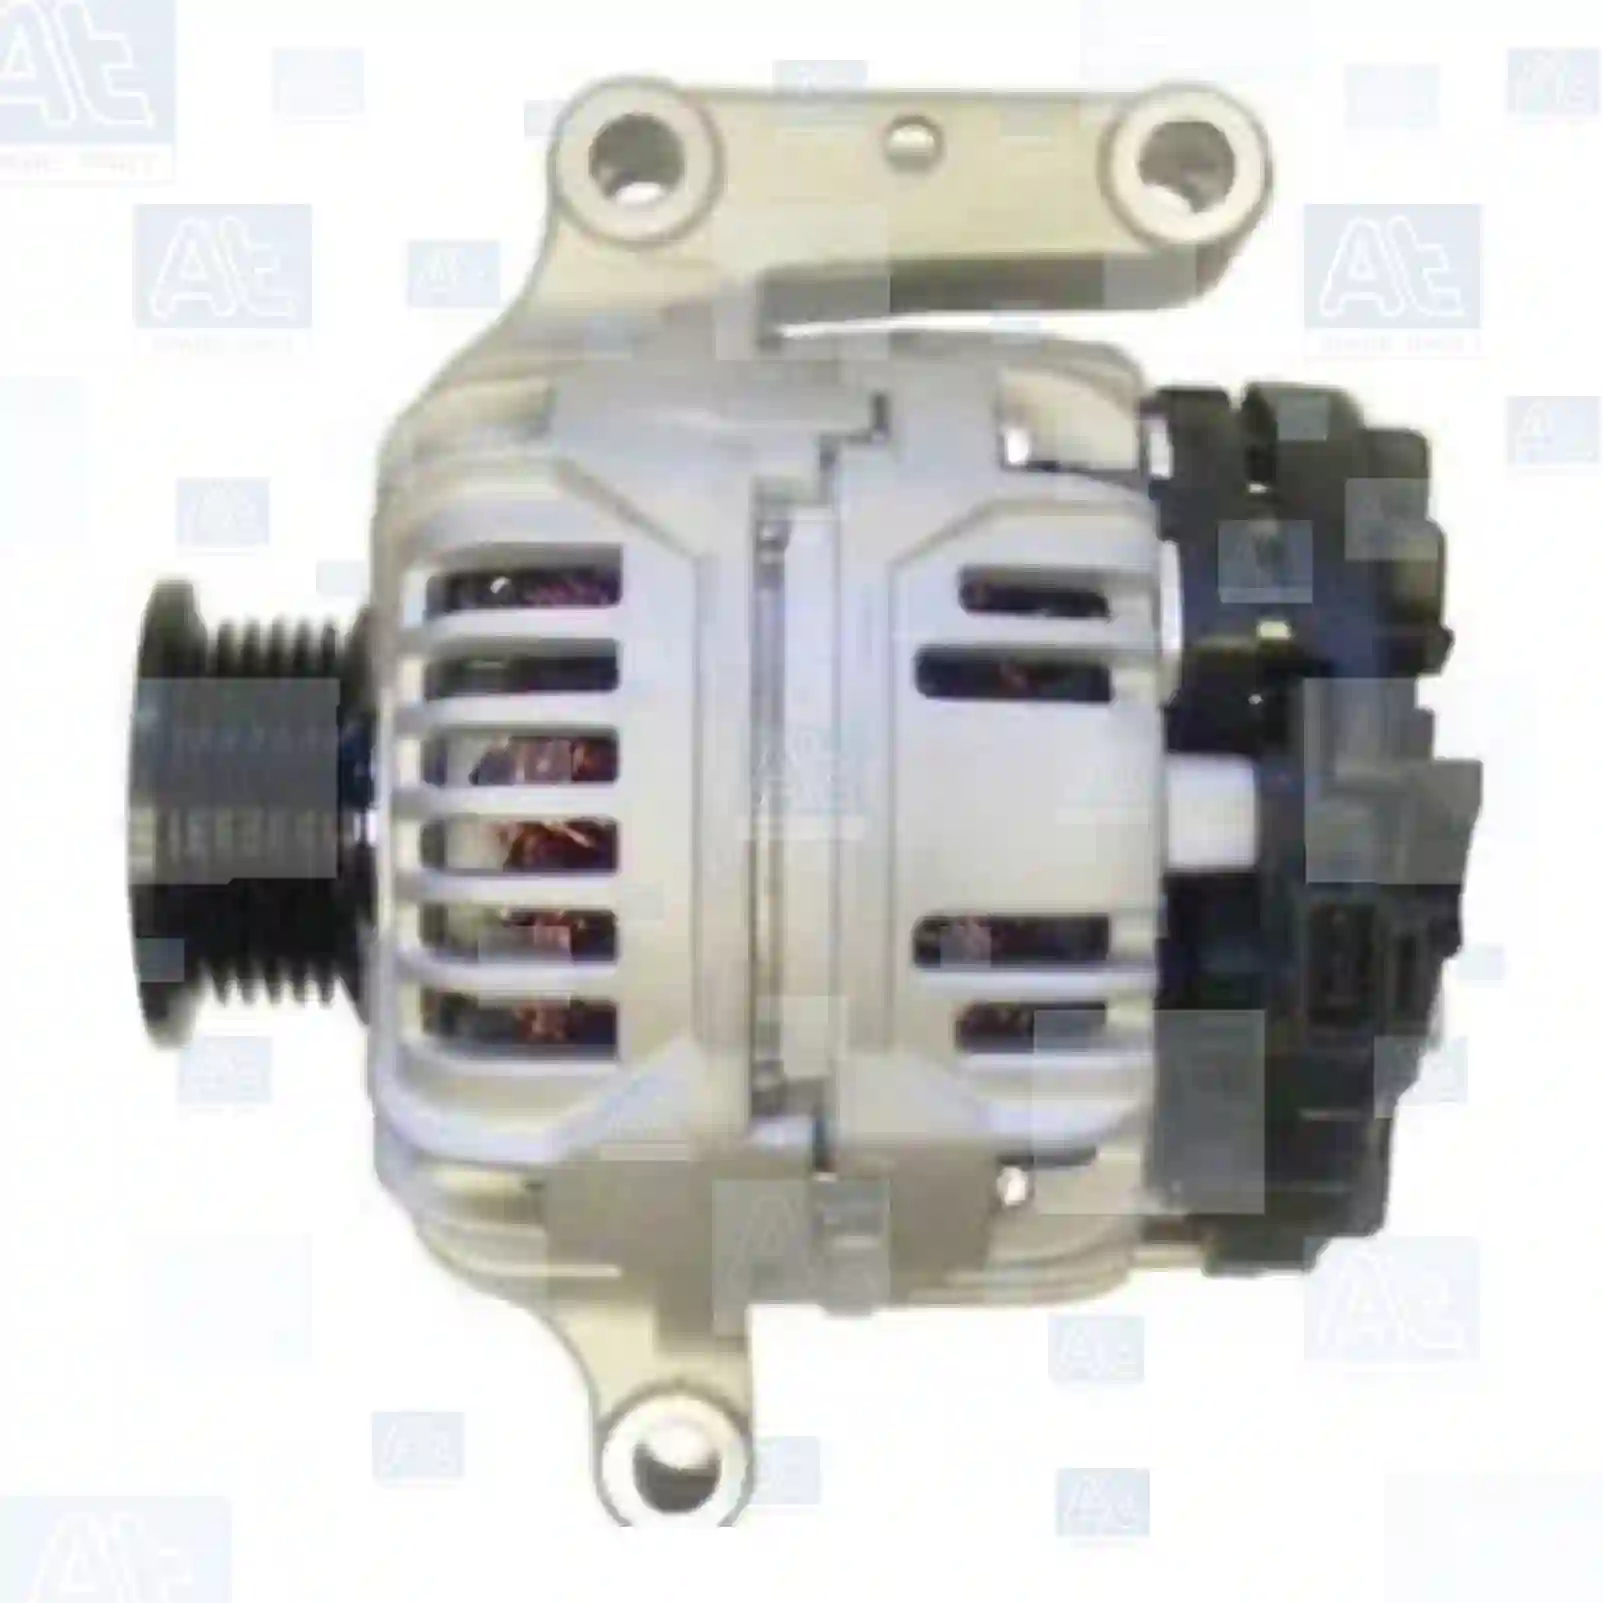 Alternator, at no 77711235, oem no: 1516507, 1450633, 1C1T-10300-AD, 1C1T-10300-AE, 1C1T-10300-AF, 4112235, 4371030, 4392207, 4407889, R1C1T-10300-AF At Spare Part | Engine, Accelerator Pedal, Camshaft, Connecting Rod, Crankcase, Crankshaft, Cylinder Head, Engine Suspension Mountings, Exhaust Manifold, Exhaust Gas Recirculation, Filter Kits, Flywheel Housing, General Overhaul Kits, Engine, Intake Manifold, Oil Cleaner, Oil Cooler, Oil Filter, Oil Pump, Oil Sump, Piston & Liner, Sensor & Switch, Timing Case, Turbocharger, Cooling System, Belt Tensioner, Coolant Filter, Coolant Pipe, Corrosion Prevention Agent, Drive, Expansion Tank, Fan, Intercooler, Monitors & Gauges, Radiator, Thermostat, V-Belt / Timing belt, Water Pump, Fuel System, Electronical Injector Unit, Feed Pump, Fuel Filter, cpl., Fuel Gauge Sender,  Fuel Line, Fuel Pump, Fuel Tank, Injection Line Kit, Injection Pump, Exhaust System, Clutch & Pedal, Gearbox, Propeller Shaft, Axles, Brake System, Hubs & Wheels, Suspension, Leaf Spring, Universal Parts / Accessories, Steering, Electrical System, Cabin Alternator, at no 77711235, oem no: 1516507, 1450633, 1C1T-10300-AD, 1C1T-10300-AE, 1C1T-10300-AF, 4112235, 4371030, 4392207, 4407889, R1C1T-10300-AF At Spare Part | Engine, Accelerator Pedal, Camshaft, Connecting Rod, Crankcase, Crankshaft, Cylinder Head, Engine Suspension Mountings, Exhaust Manifold, Exhaust Gas Recirculation, Filter Kits, Flywheel Housing, General Overhaul Kits, Engine, Intake Manifold, Oil Cleaner, Oil Cooler, Oil Filter, Oil Pump, Oil Sump, Piston & Liner, Sensor & Switch, Timing Case, Turbocharger, Cooling System, Belt Tensioner, Coolant Filter, Coolant Pipe, Corrosion Prevention Agent, Drive, Expansion Tank, Fan, Intercooler, Monitors & Gauges, Radiator, Thermostat, V-Belt / Timing belt, Water Pump, Fuel System, Electronical Injector Unit, Feed Pump, Fuel Filter, cpl., Fuel Gauge Sender,  Fuel Line, Fuel Pump, Fuel Tank, Injection Line Kit, Injection Pump, Exhaust System, Clutch & Pedal, Gearbox, Propeller Shaft, Axles, Brake System, Hubs & Wheels, Suspension, Leaf Spring, Universal Parts / Accessories, Steering, Electrical System, Cabin